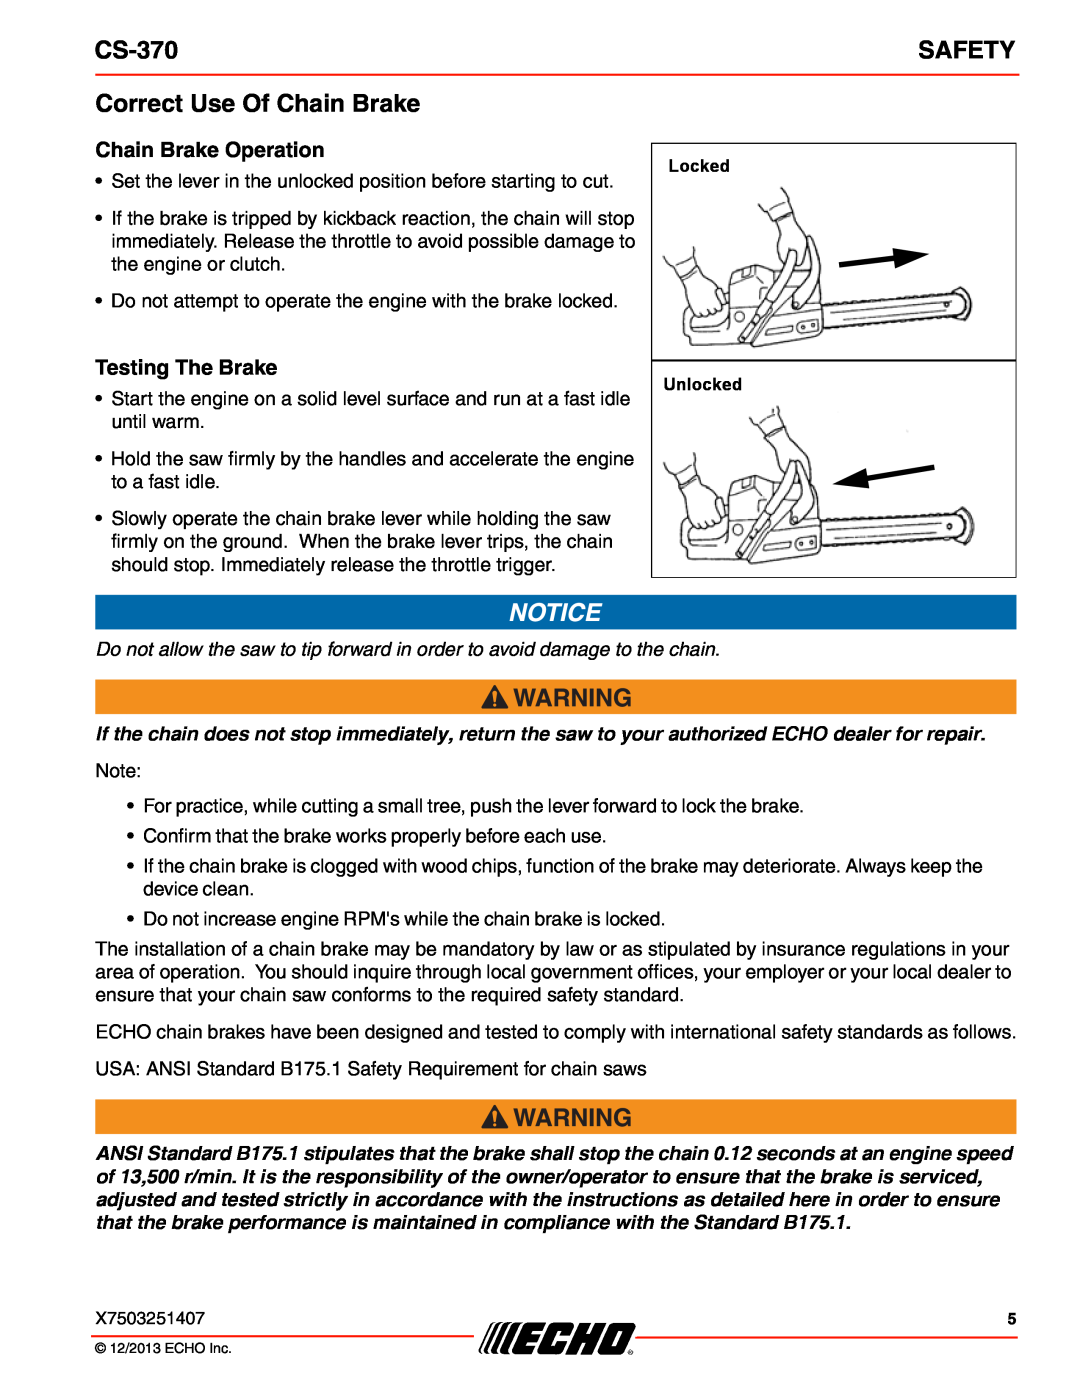 Echo CS-370 instruction manual Correct Use Of Chain Brake, Safety, Chain Brake Operation, Testing The Brake 